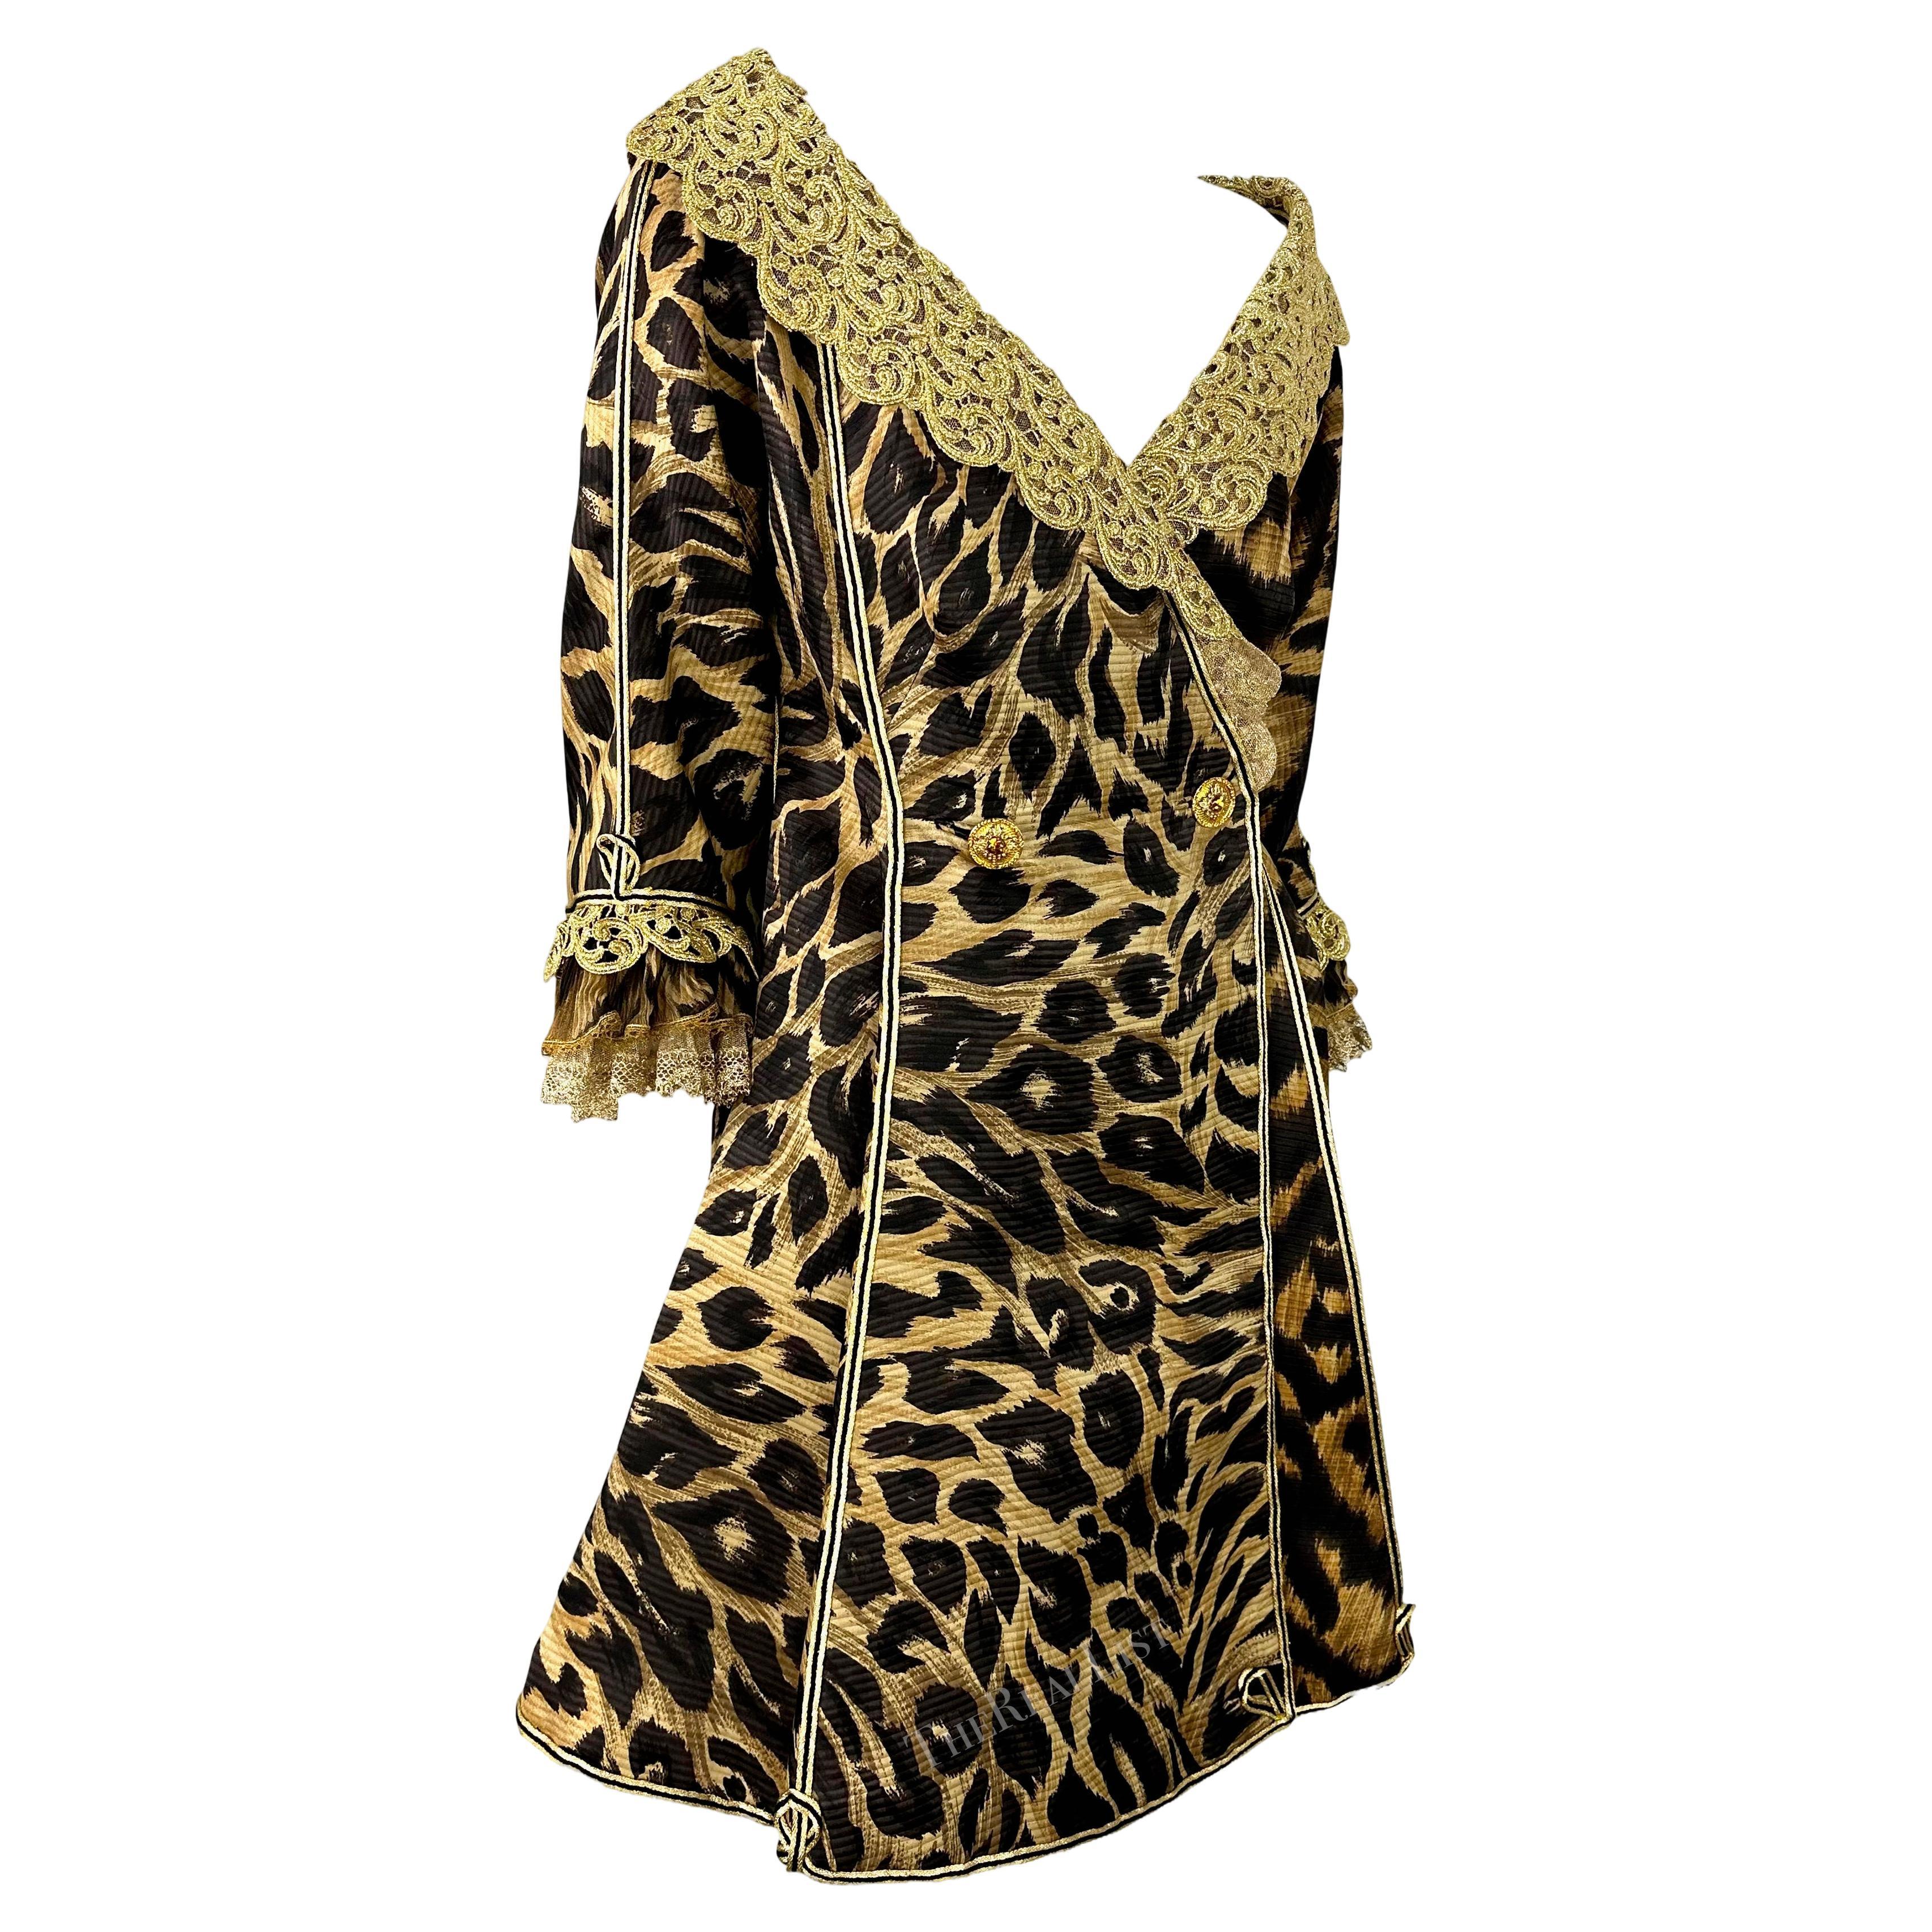 S/S 1992 Atelier Versace Haute Couture Runway Leopard Silk Gold Lace Coat Dress For Sale 9